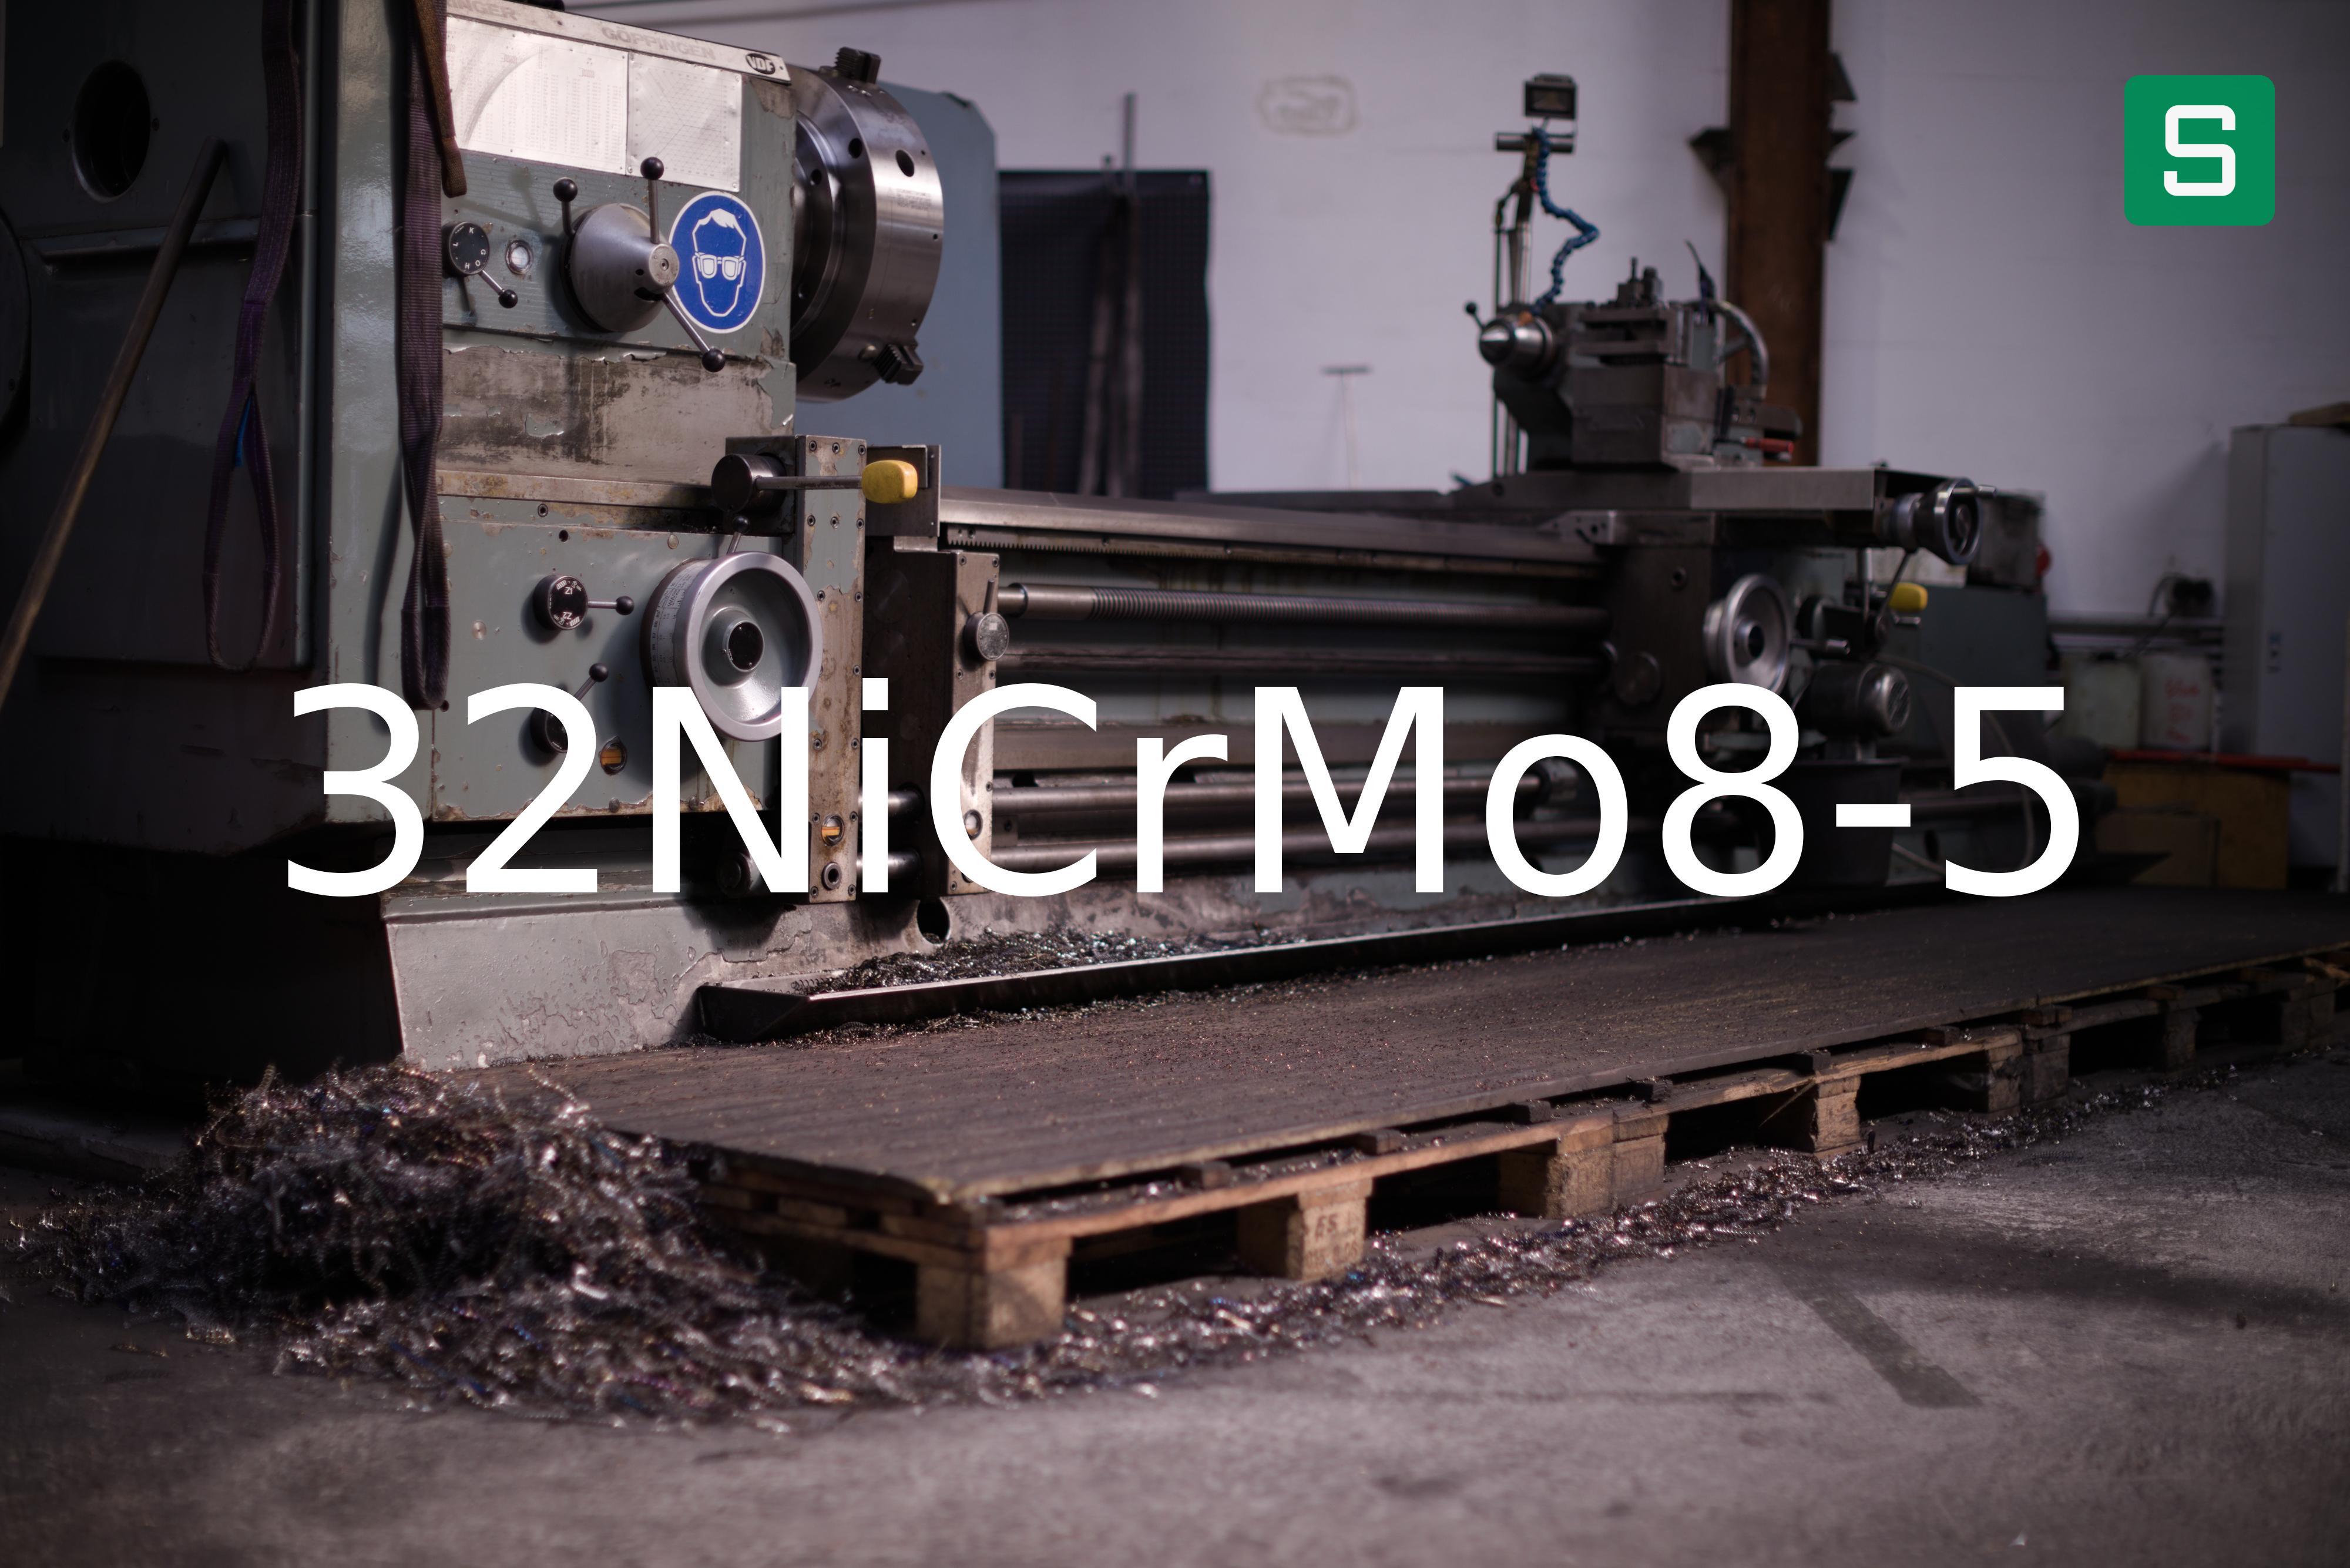 Steel Material: 32NiCrMo8-5